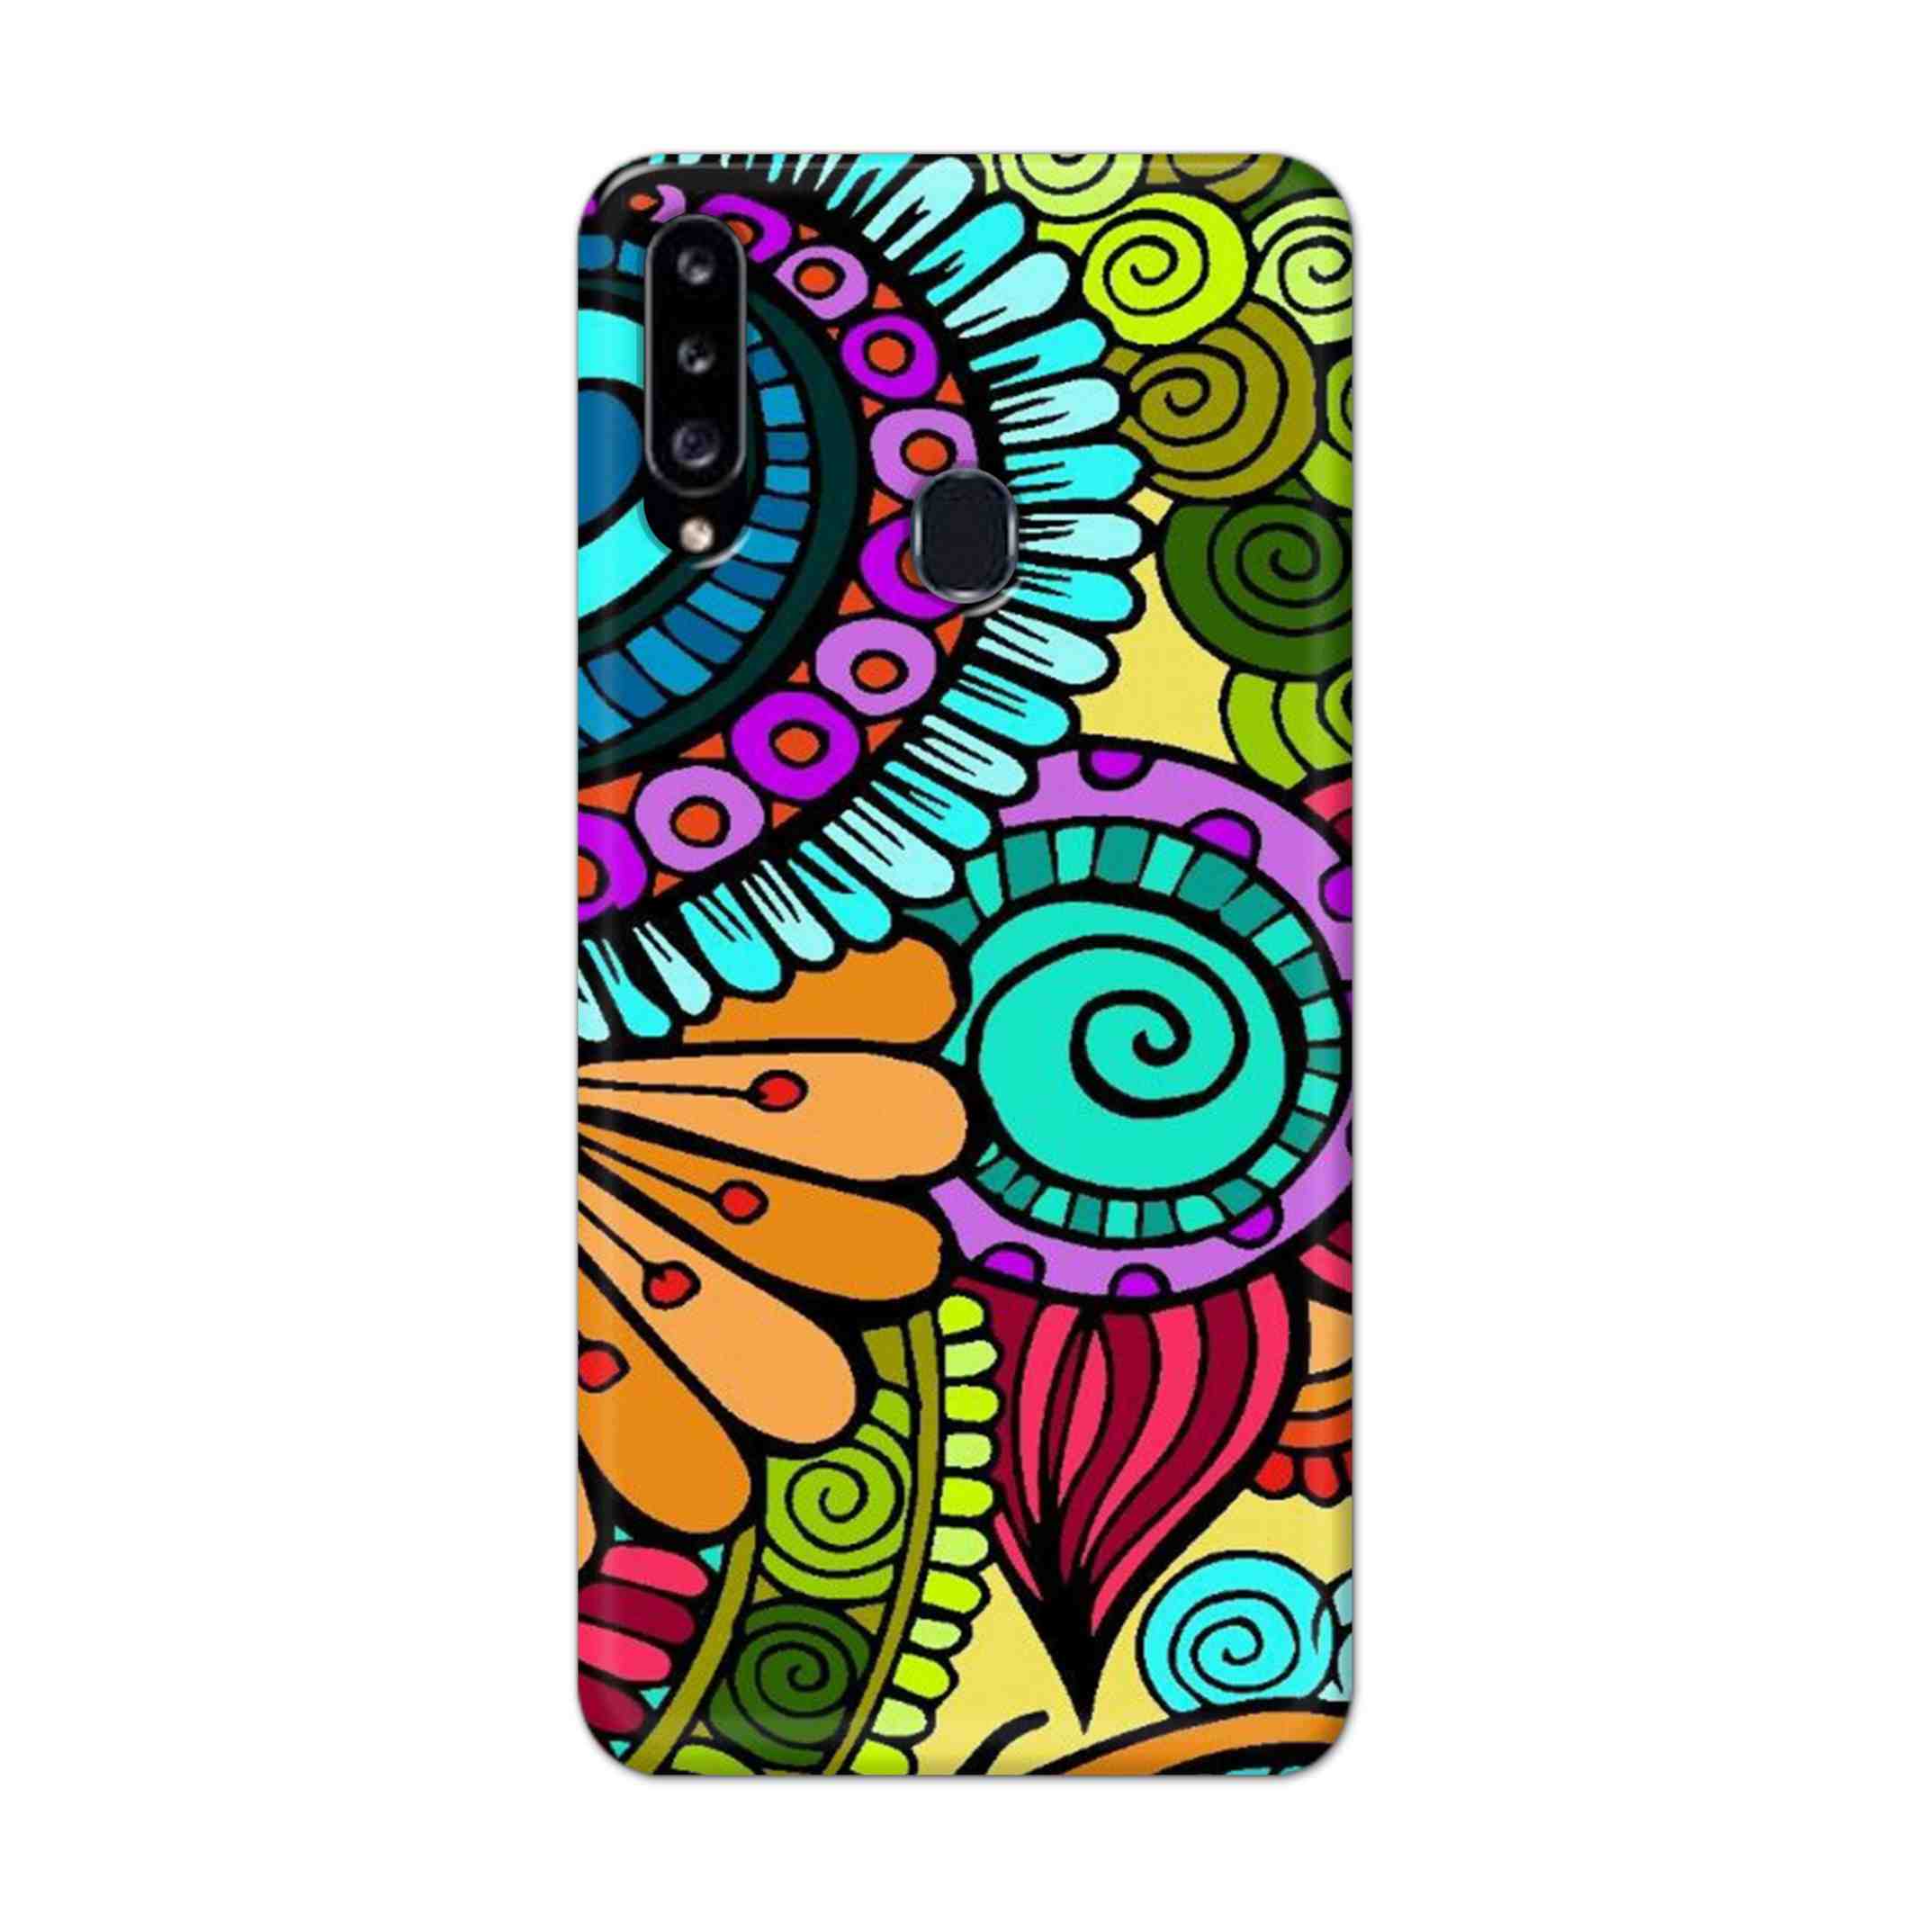 Buy The Kalachakra Mandala Hard Back Mobile Phone Case Cover For Samsung Galaxy A21 Online